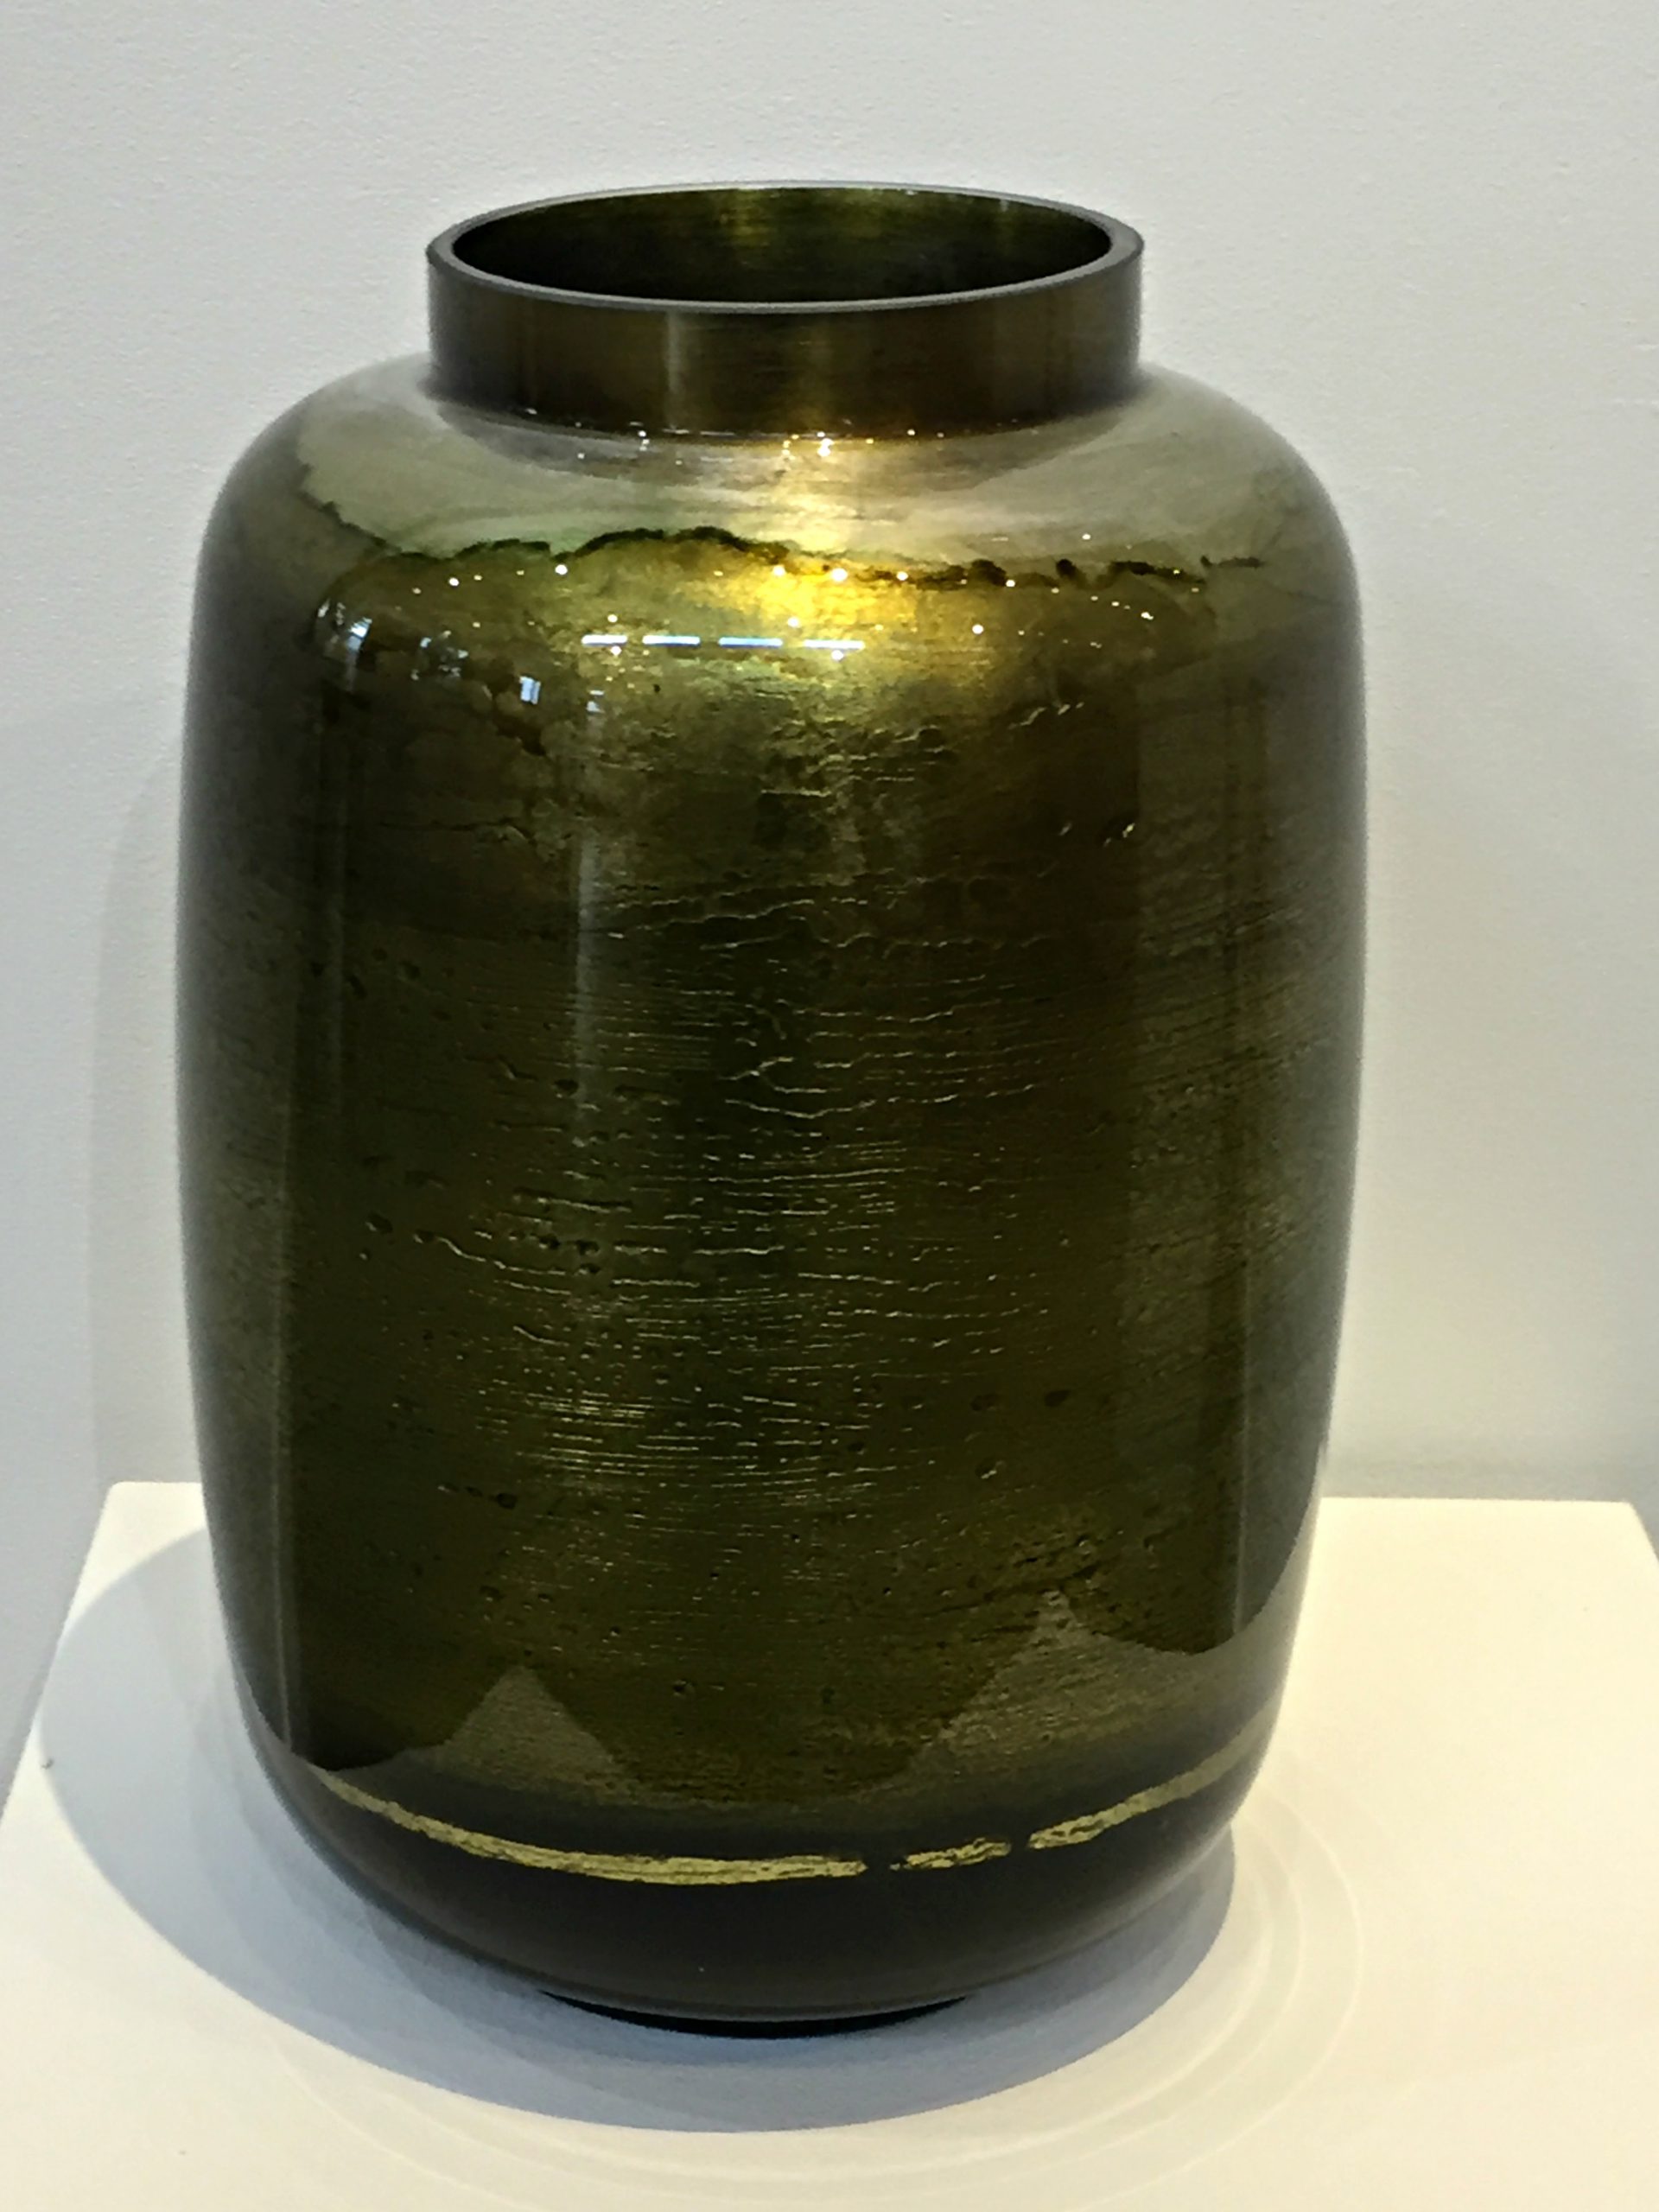 Green hand-gilded Mandarin vase by David Graff | Effusion Art Gallery + Cast Glass Studio, Invermere BC